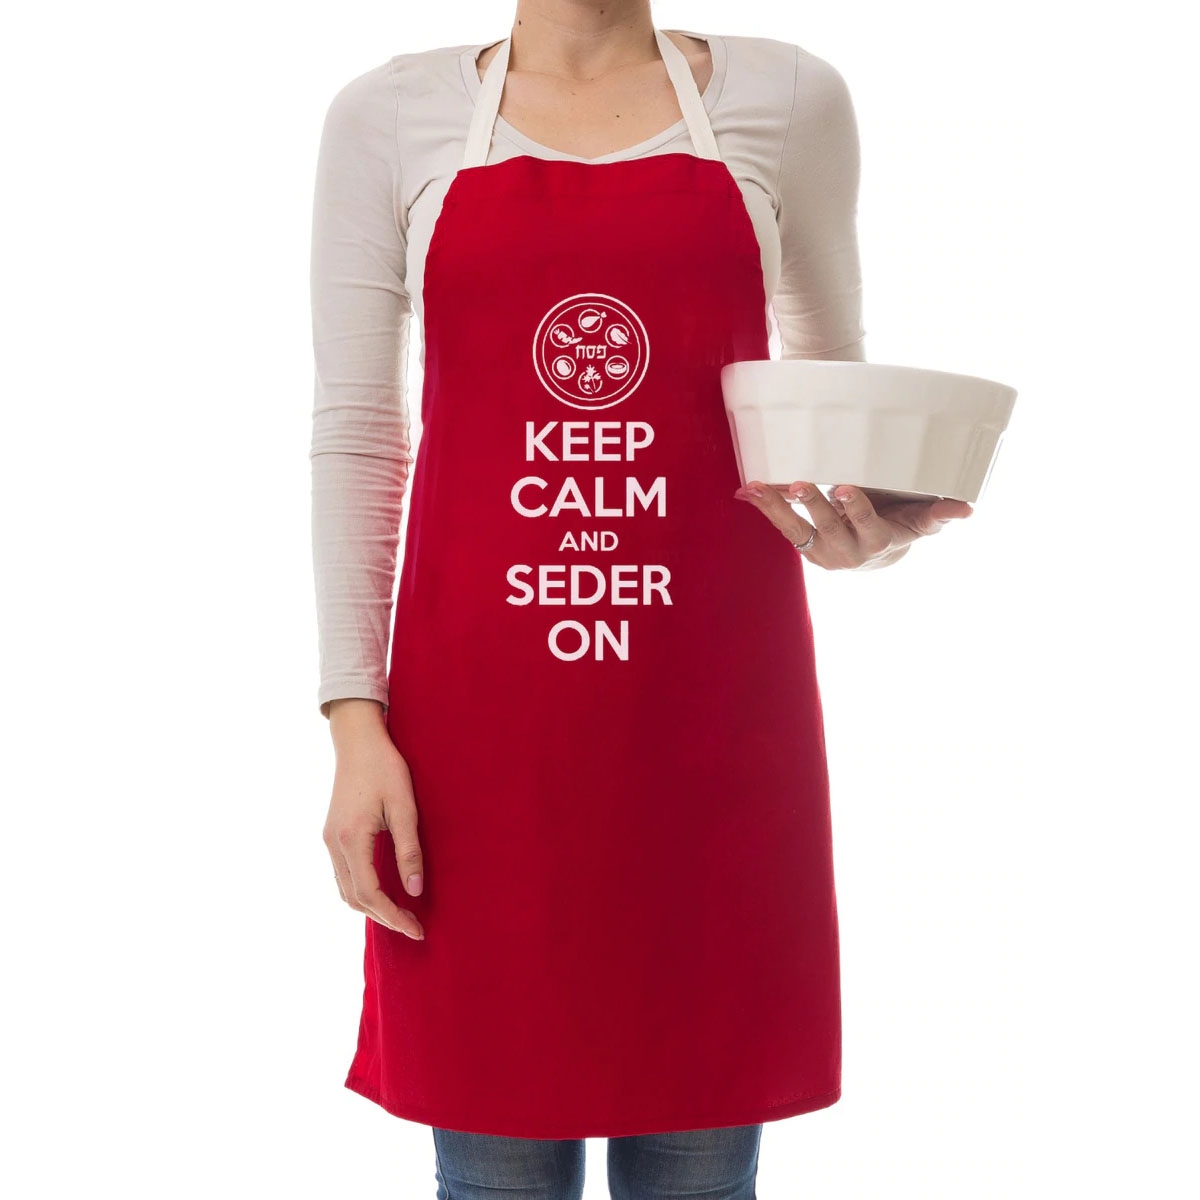 Barbara Shaw Handmade "Keep Calm and Seder On" Apron - 1